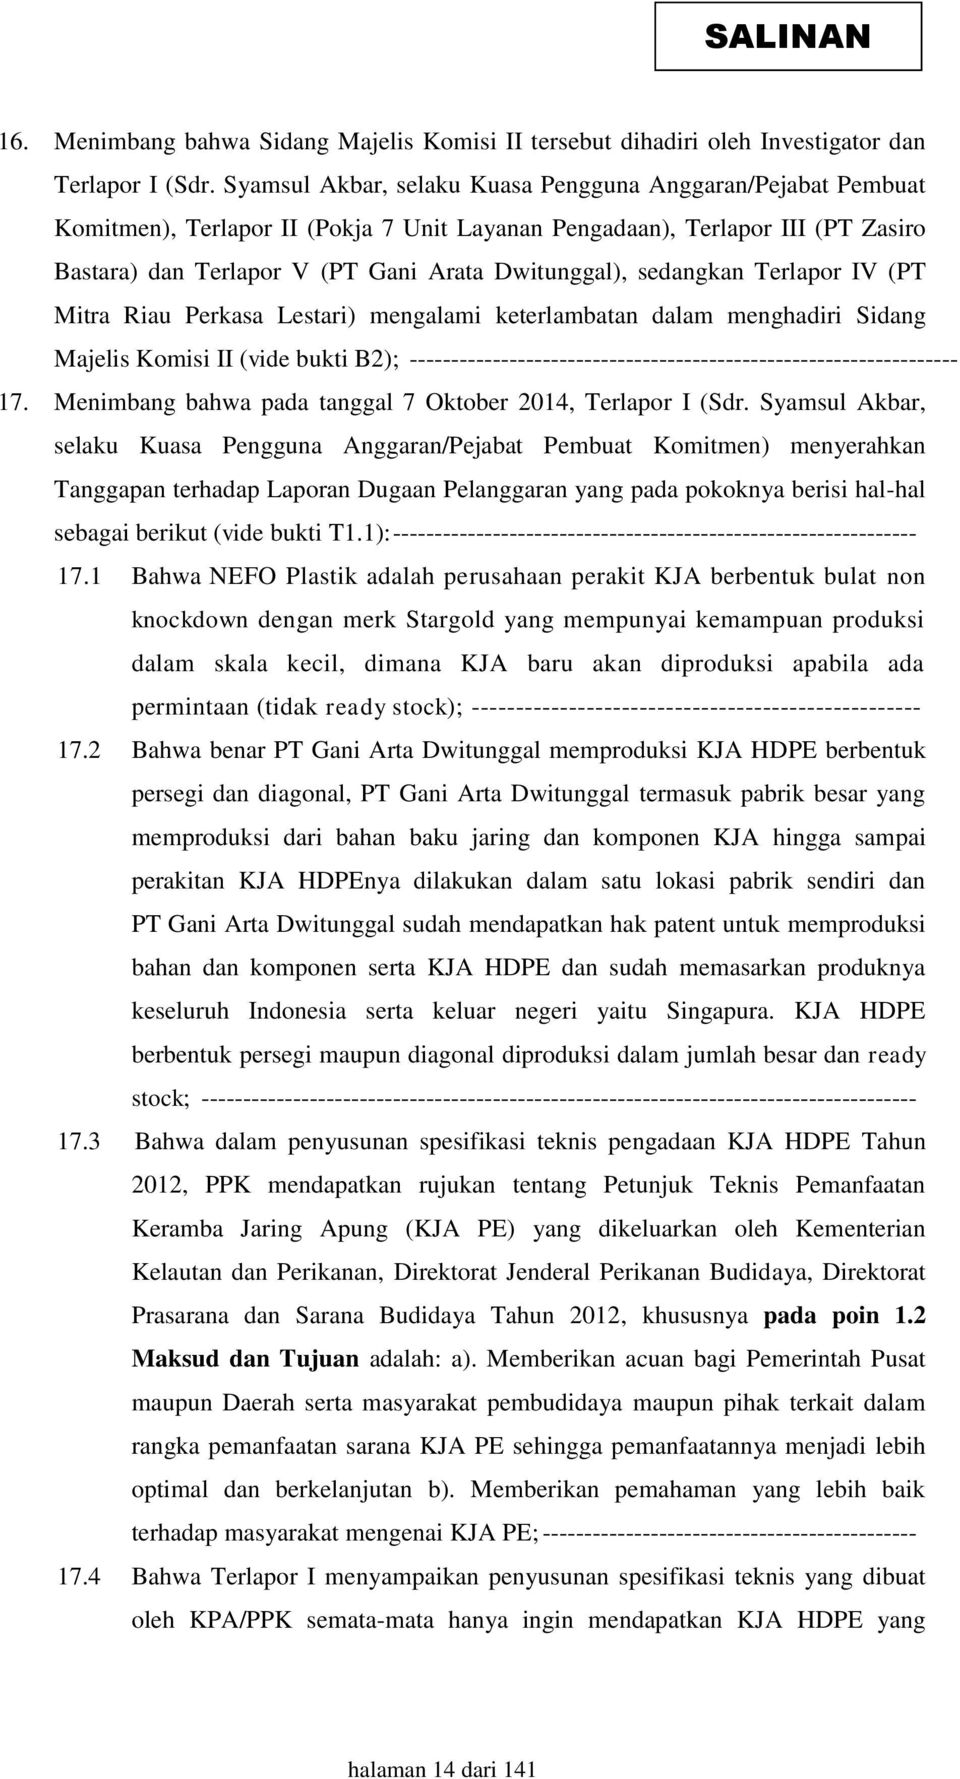 sedangkan Terlapor IV (PT Mitra Riau Perkasa Lestari) mengalami keterlambatan dalam menghadiri Sidang Majelis Komisi II (vide bukti B2);